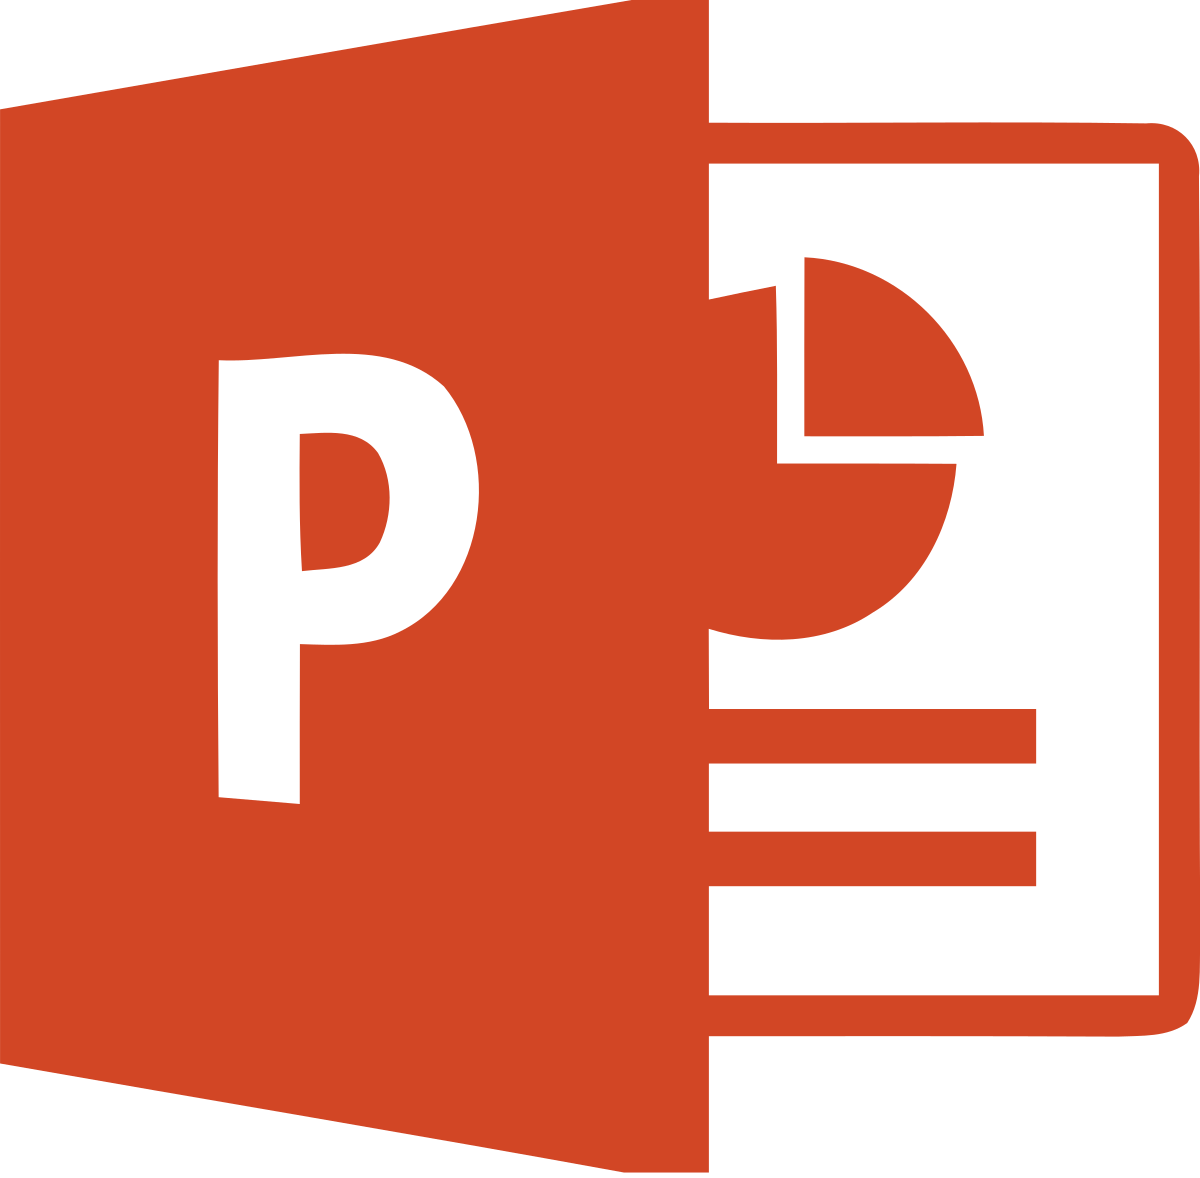 Microsoft Office повер поинт. MS POWERPOINT логотип.  Microsoft Office POWERPOINT 2019 логотип. Иконка Майкрософт повер поинт. Приложение пауэр